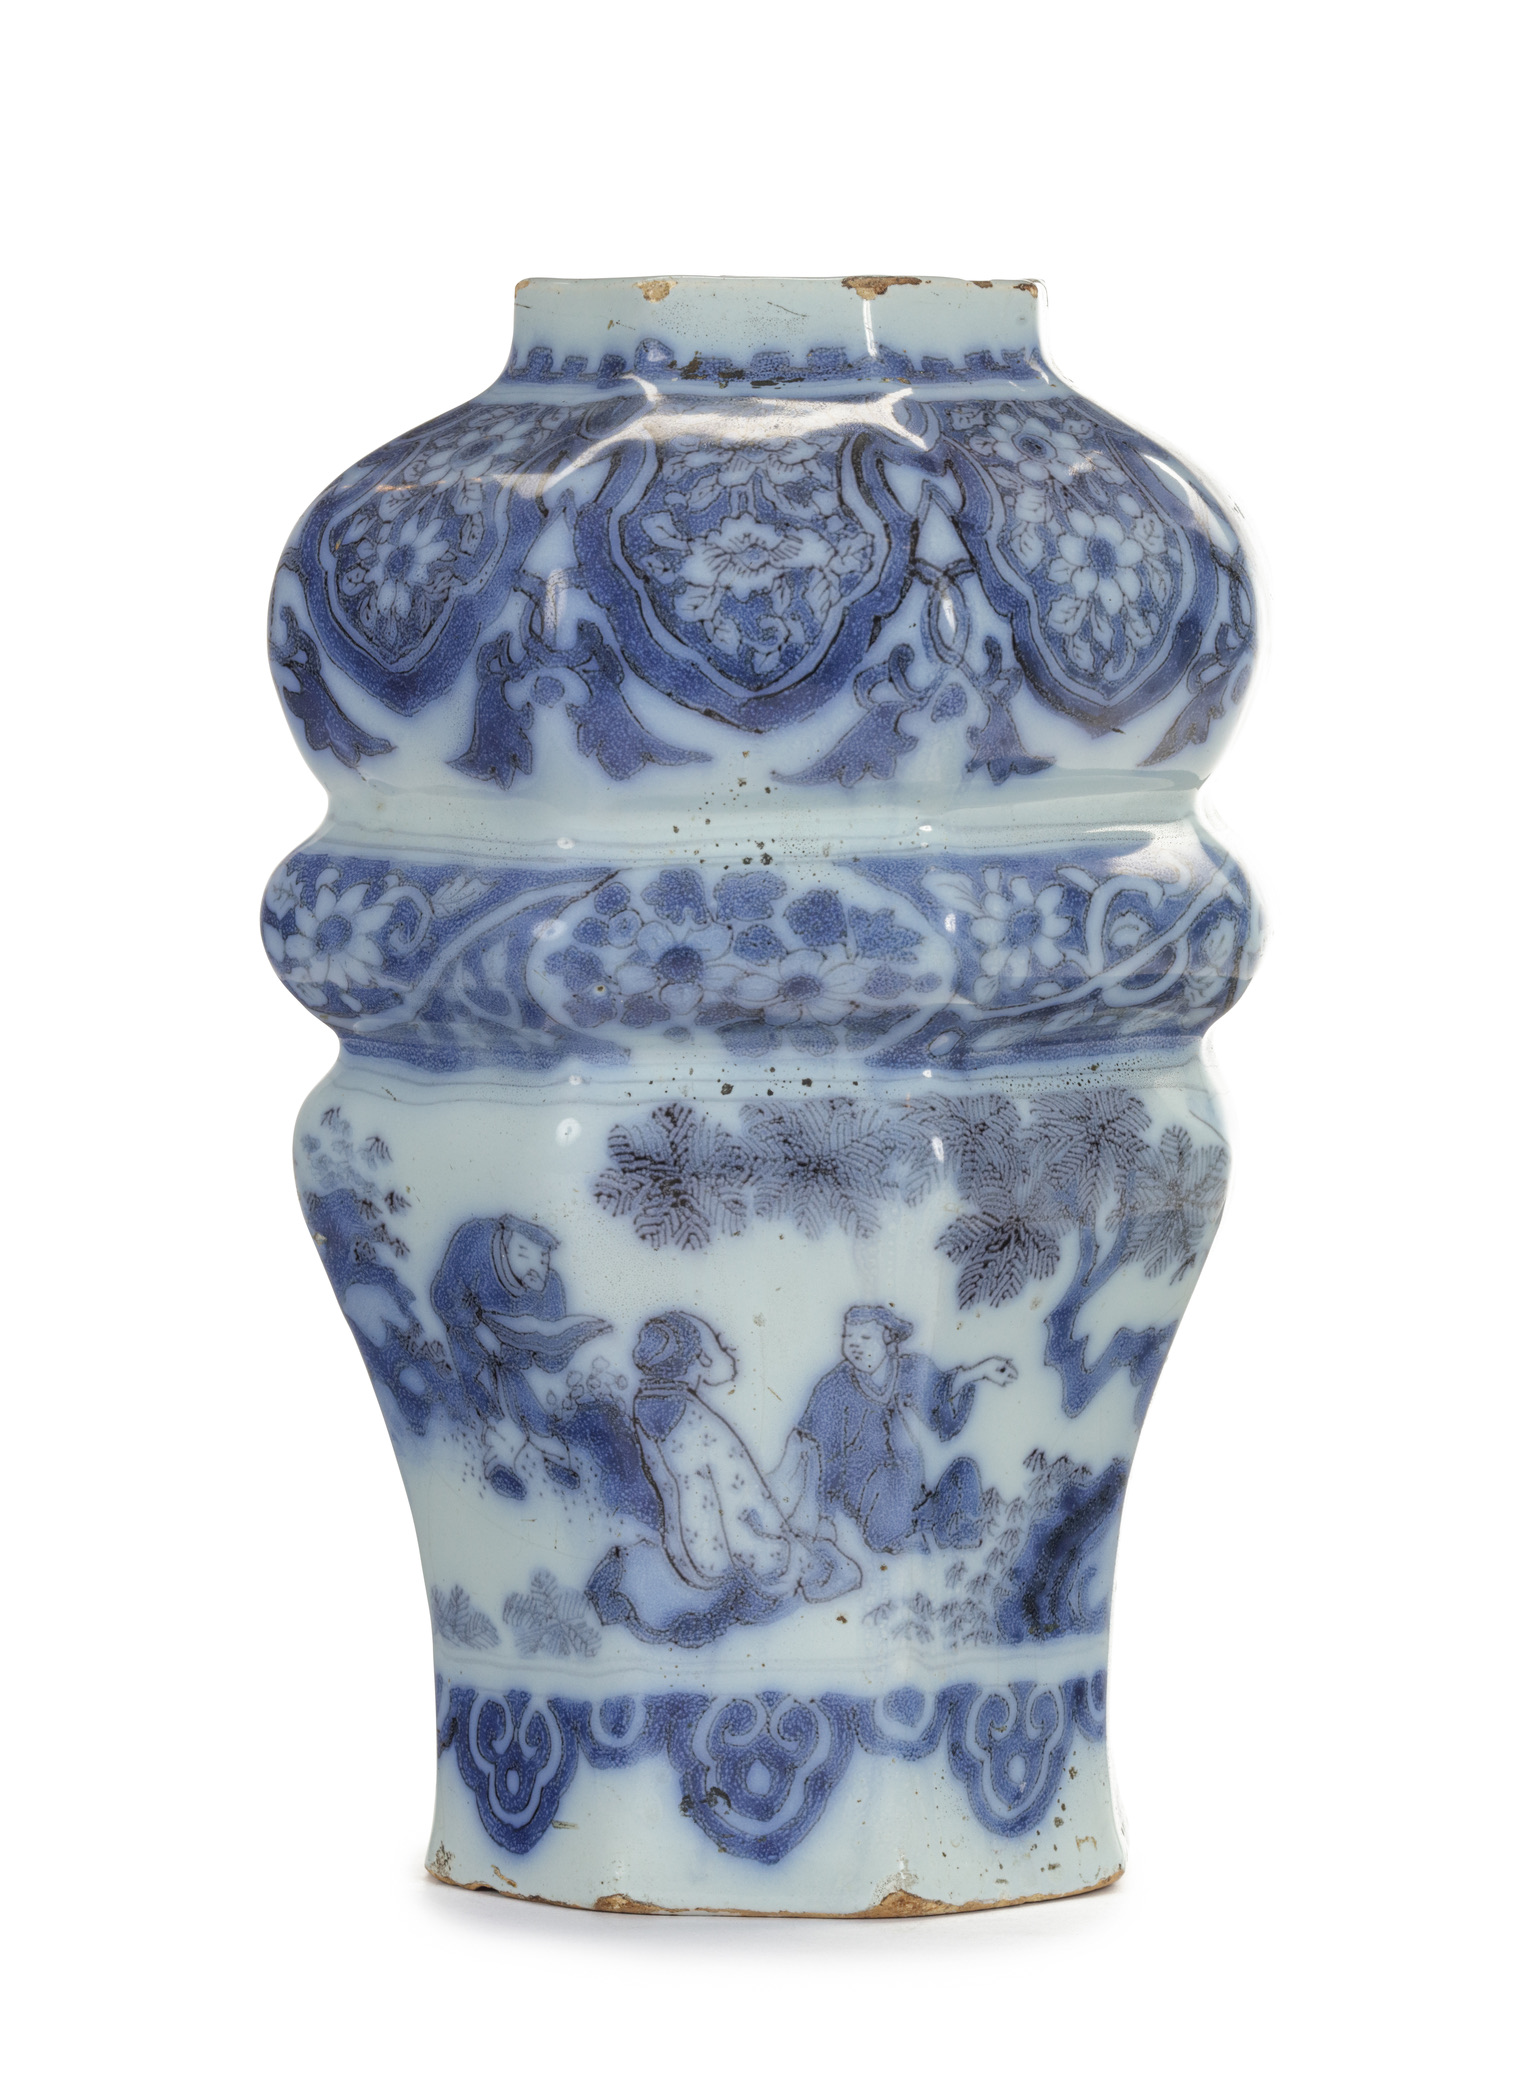 D2307. Blue and White Octagonal Vase